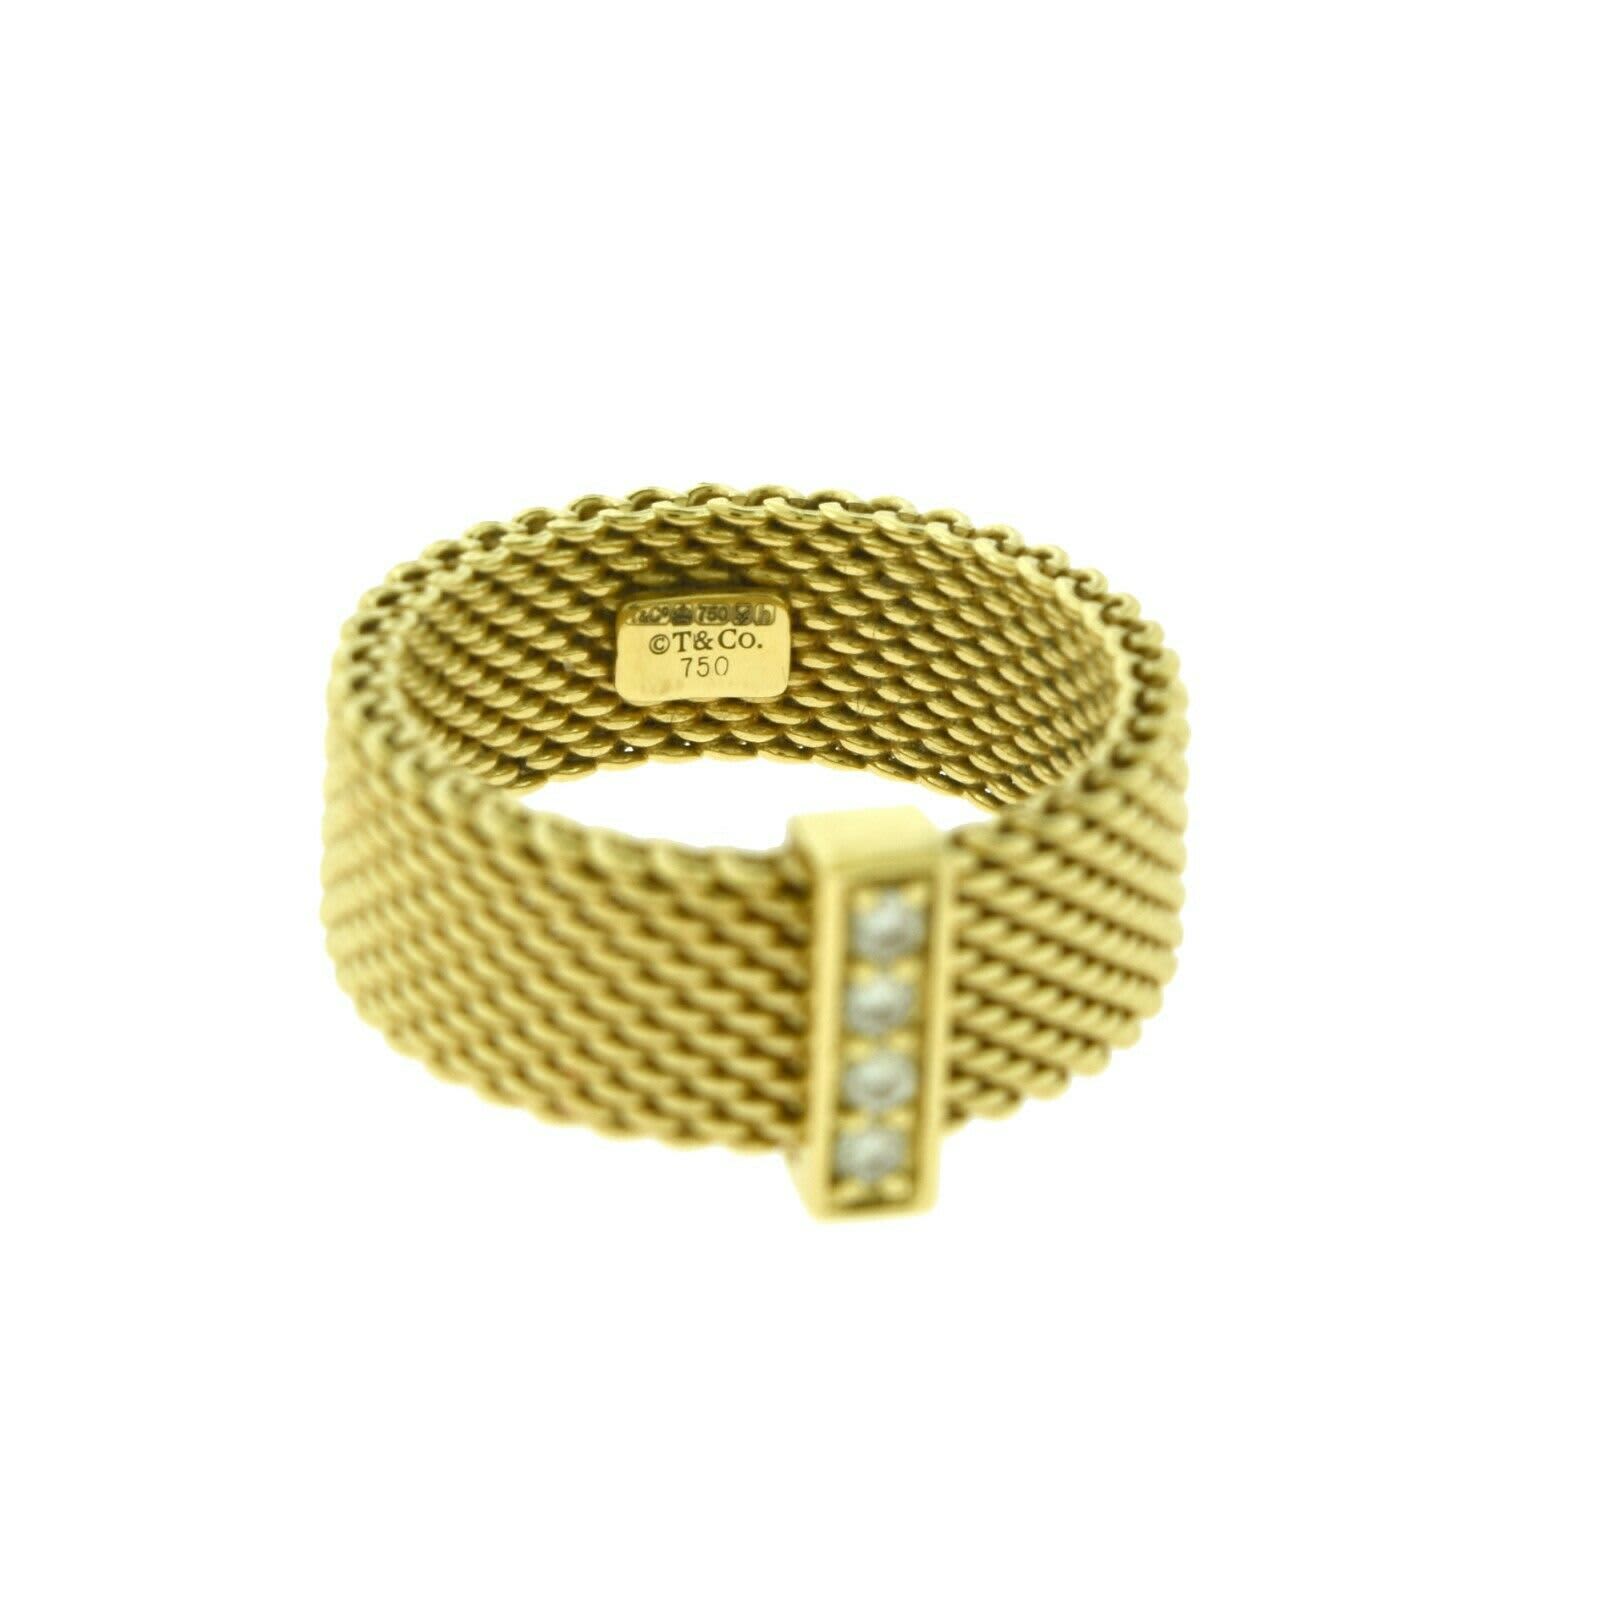 Tiffany and Co. Somerset 18 Karat Yellow Gold and Diamond Mesh Ring